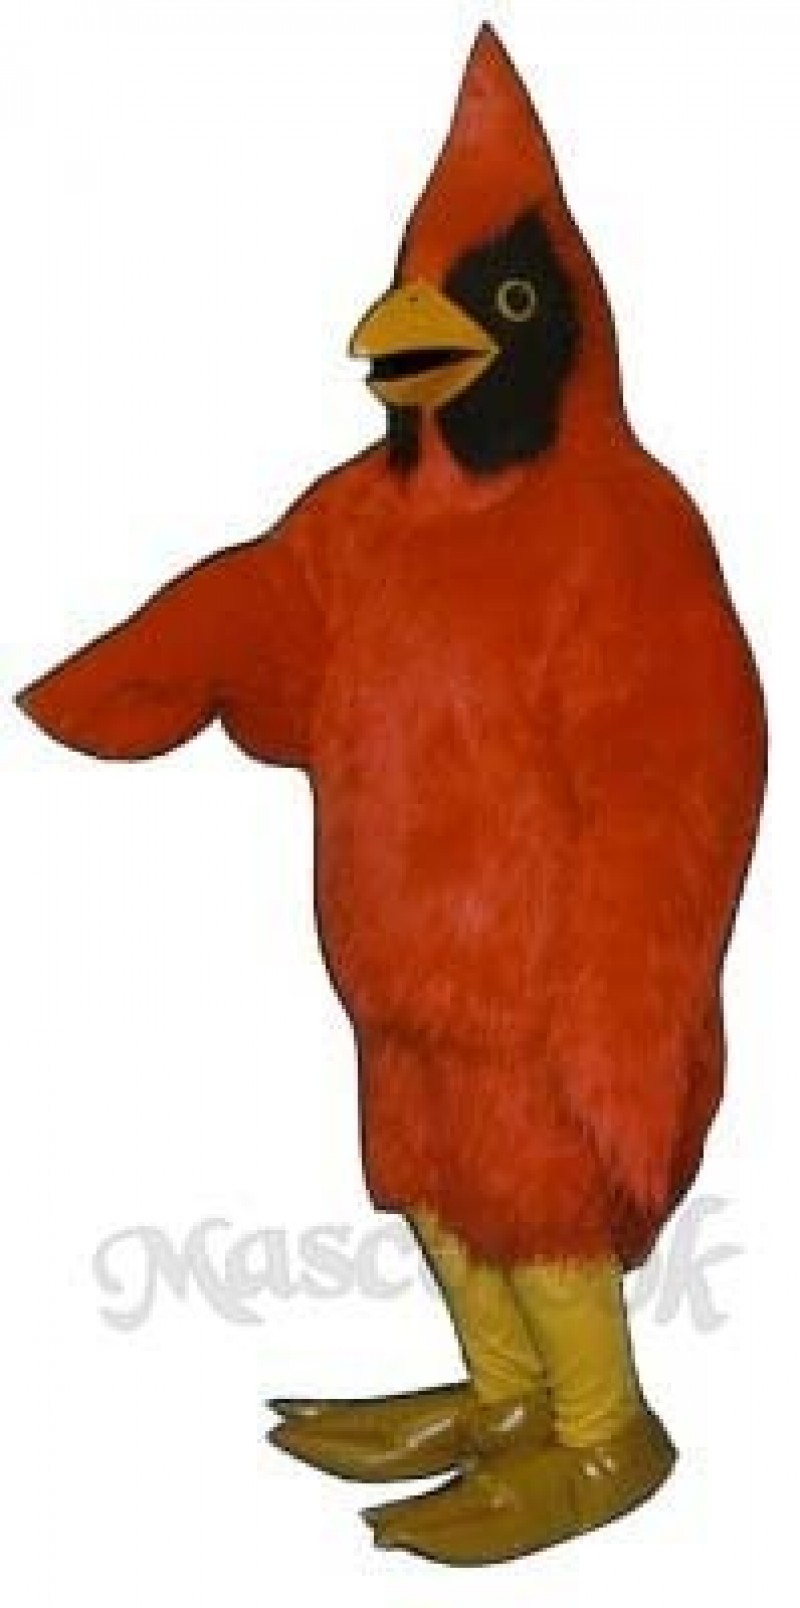 Big Cardinal Mascot Costume